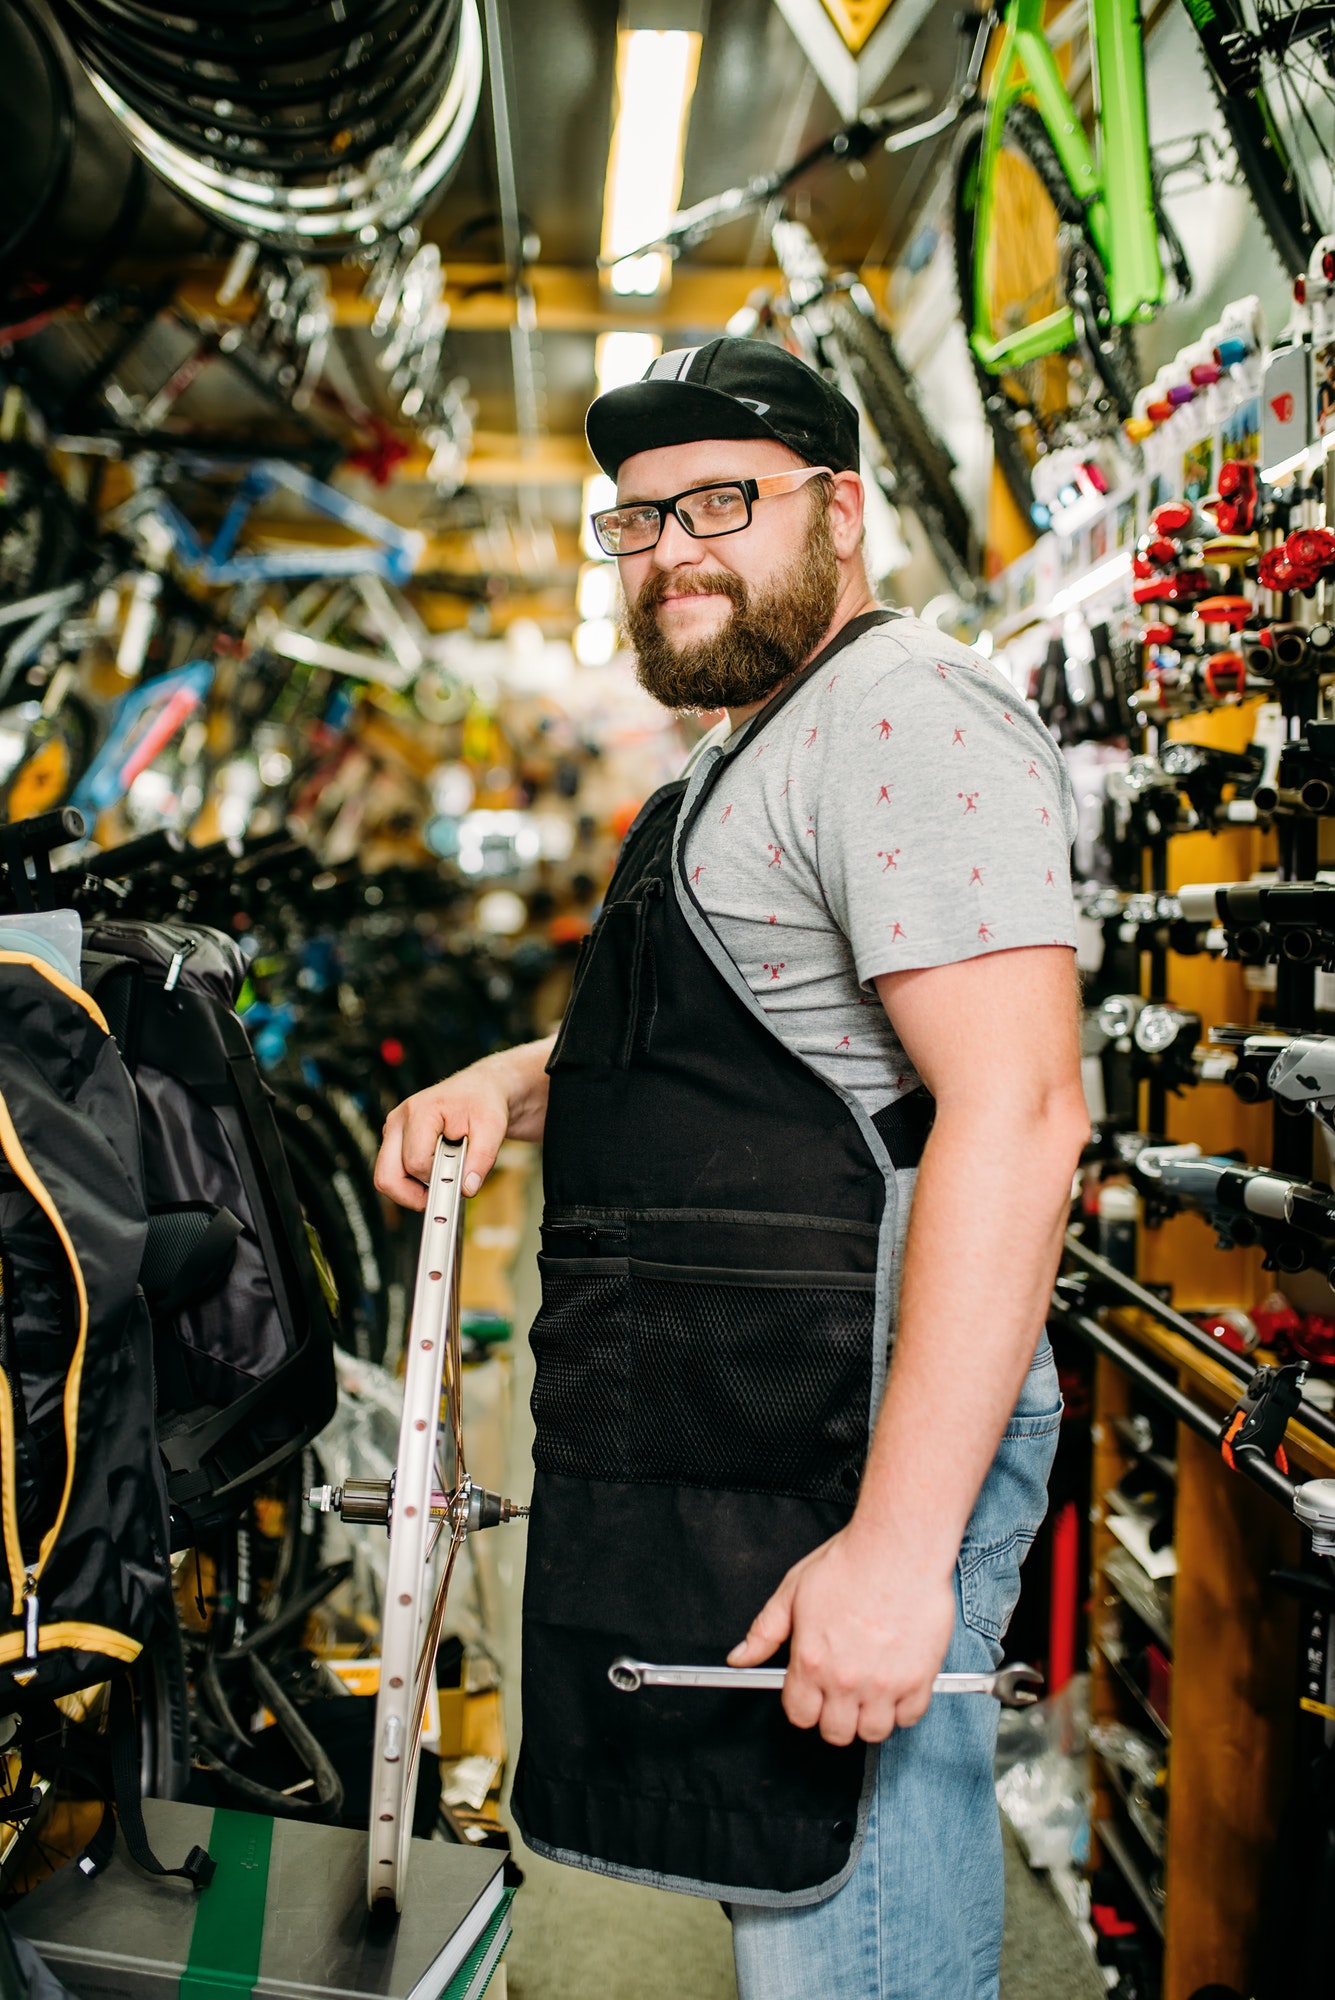 Bicycle mechanic with wheel in bike shop